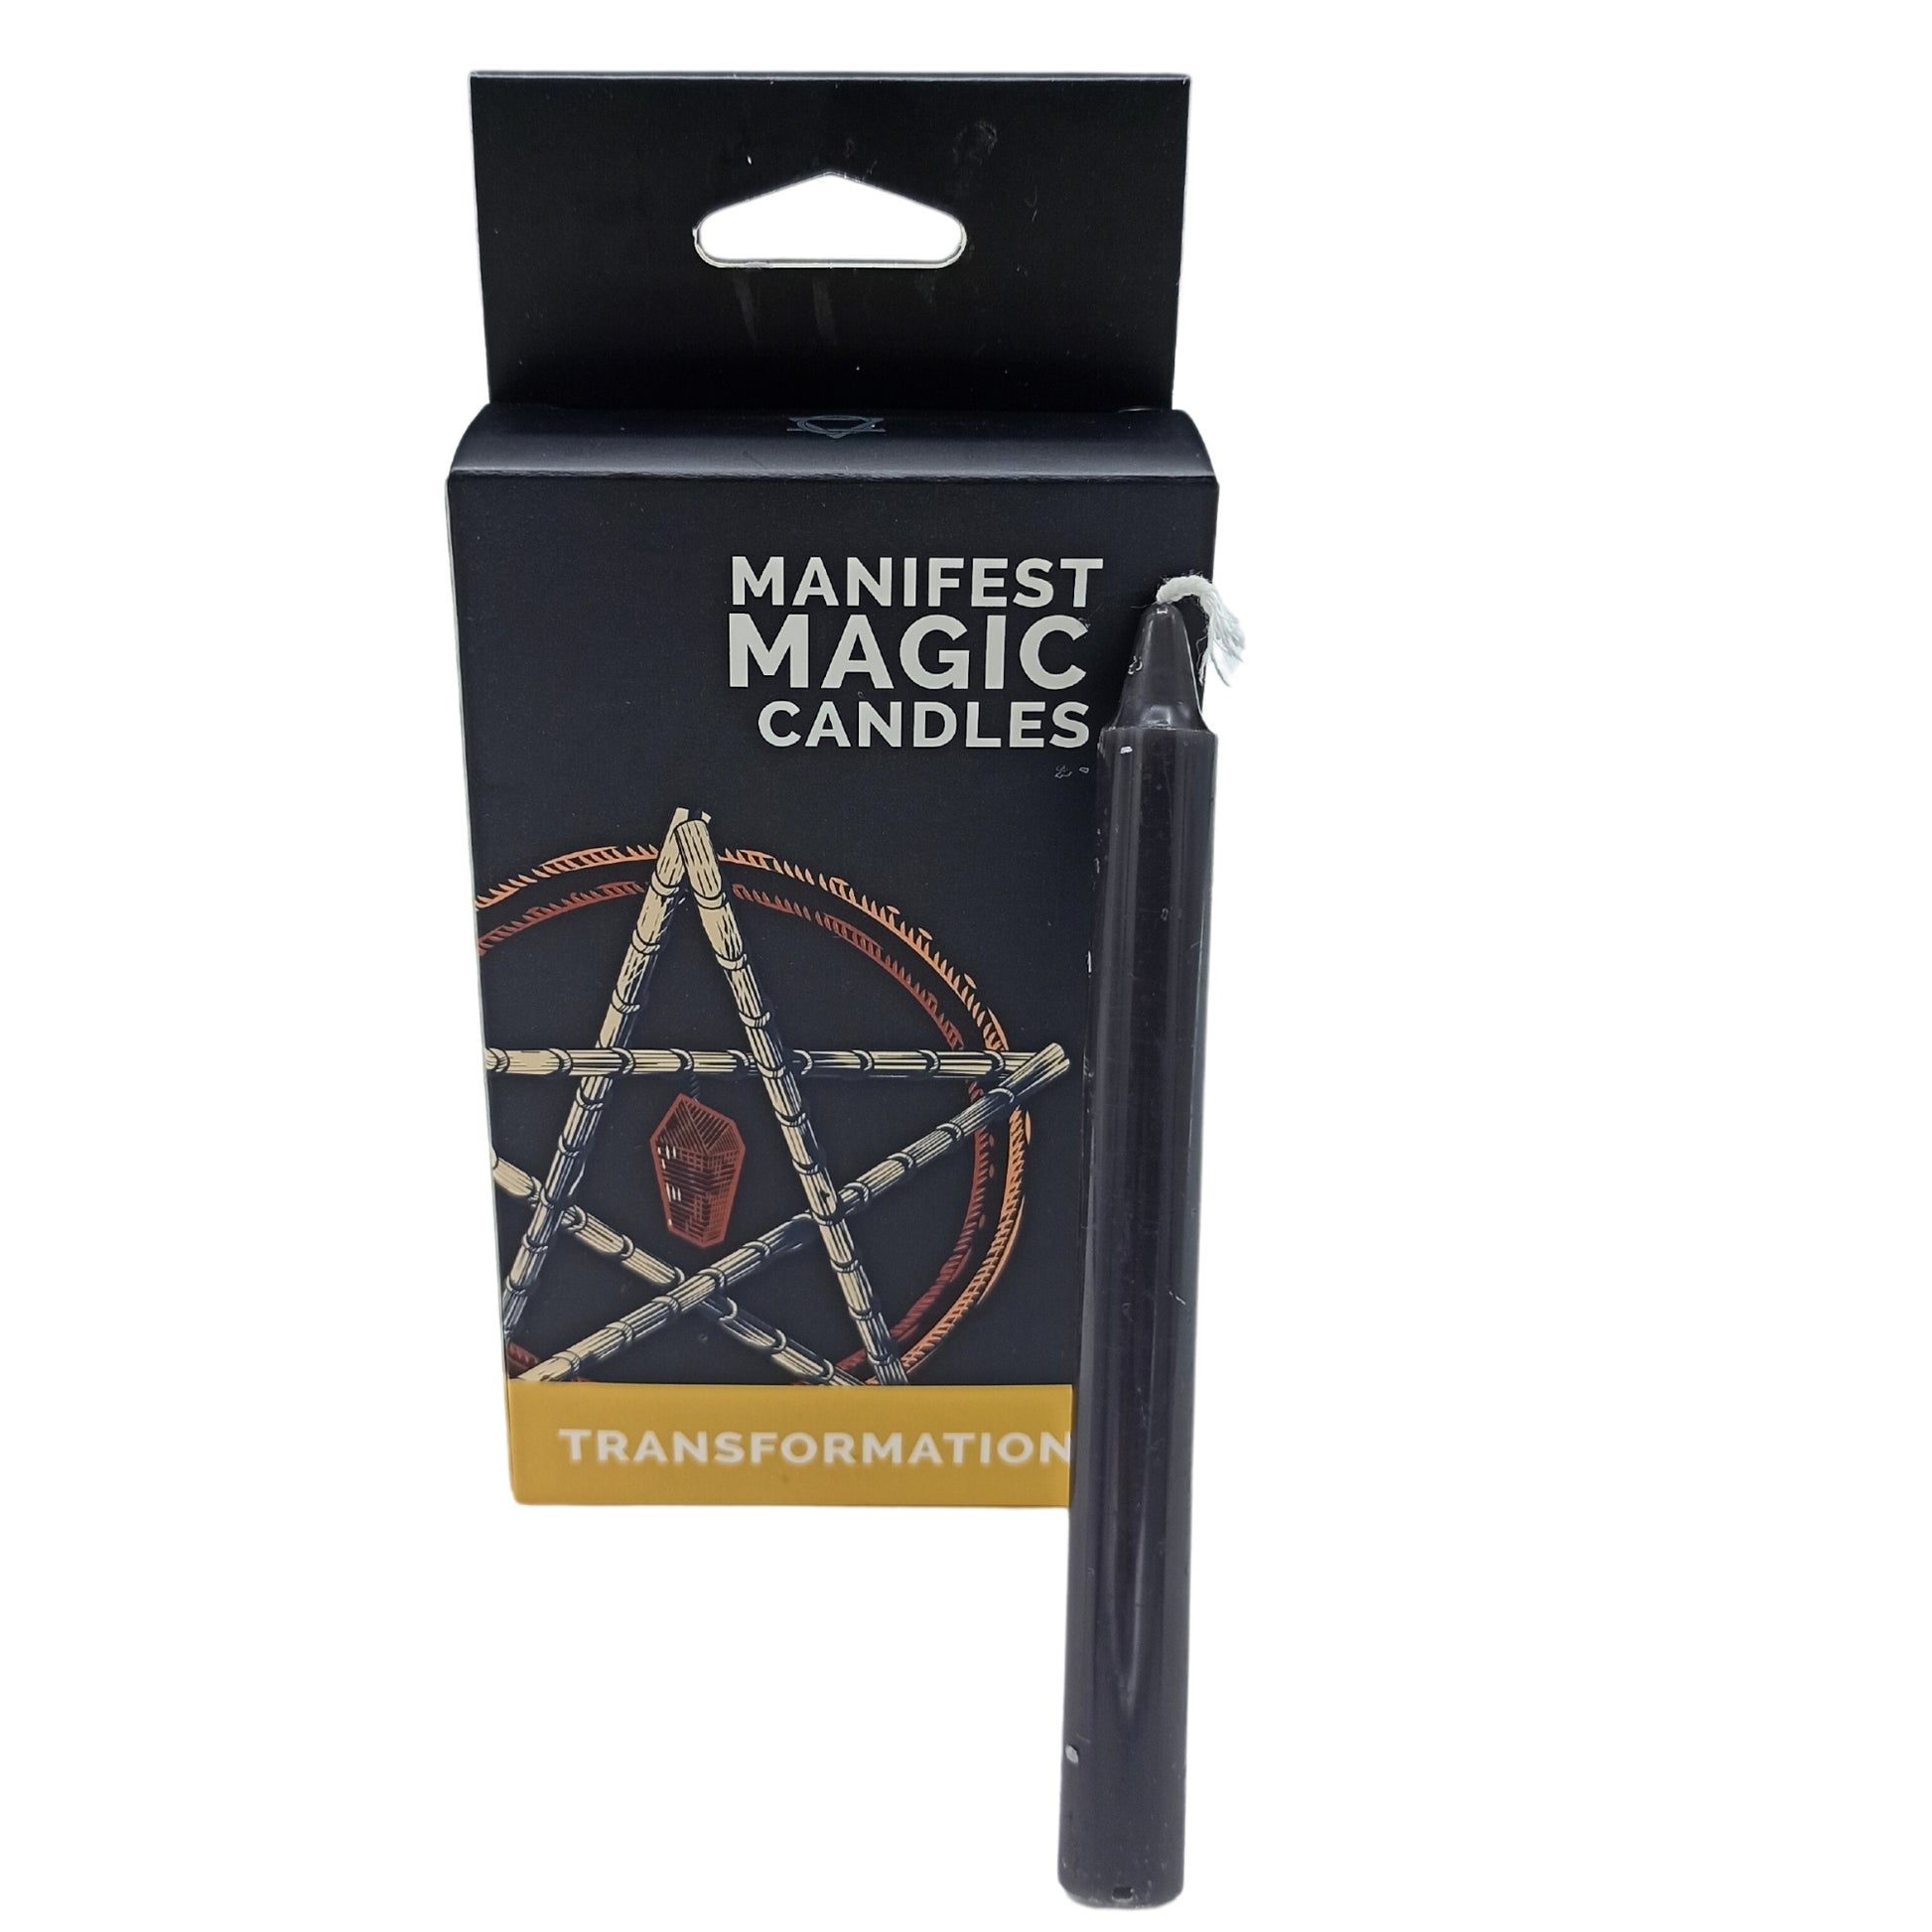 Manifest Magic Candles (pack of 12) - Black - Kaftans direct